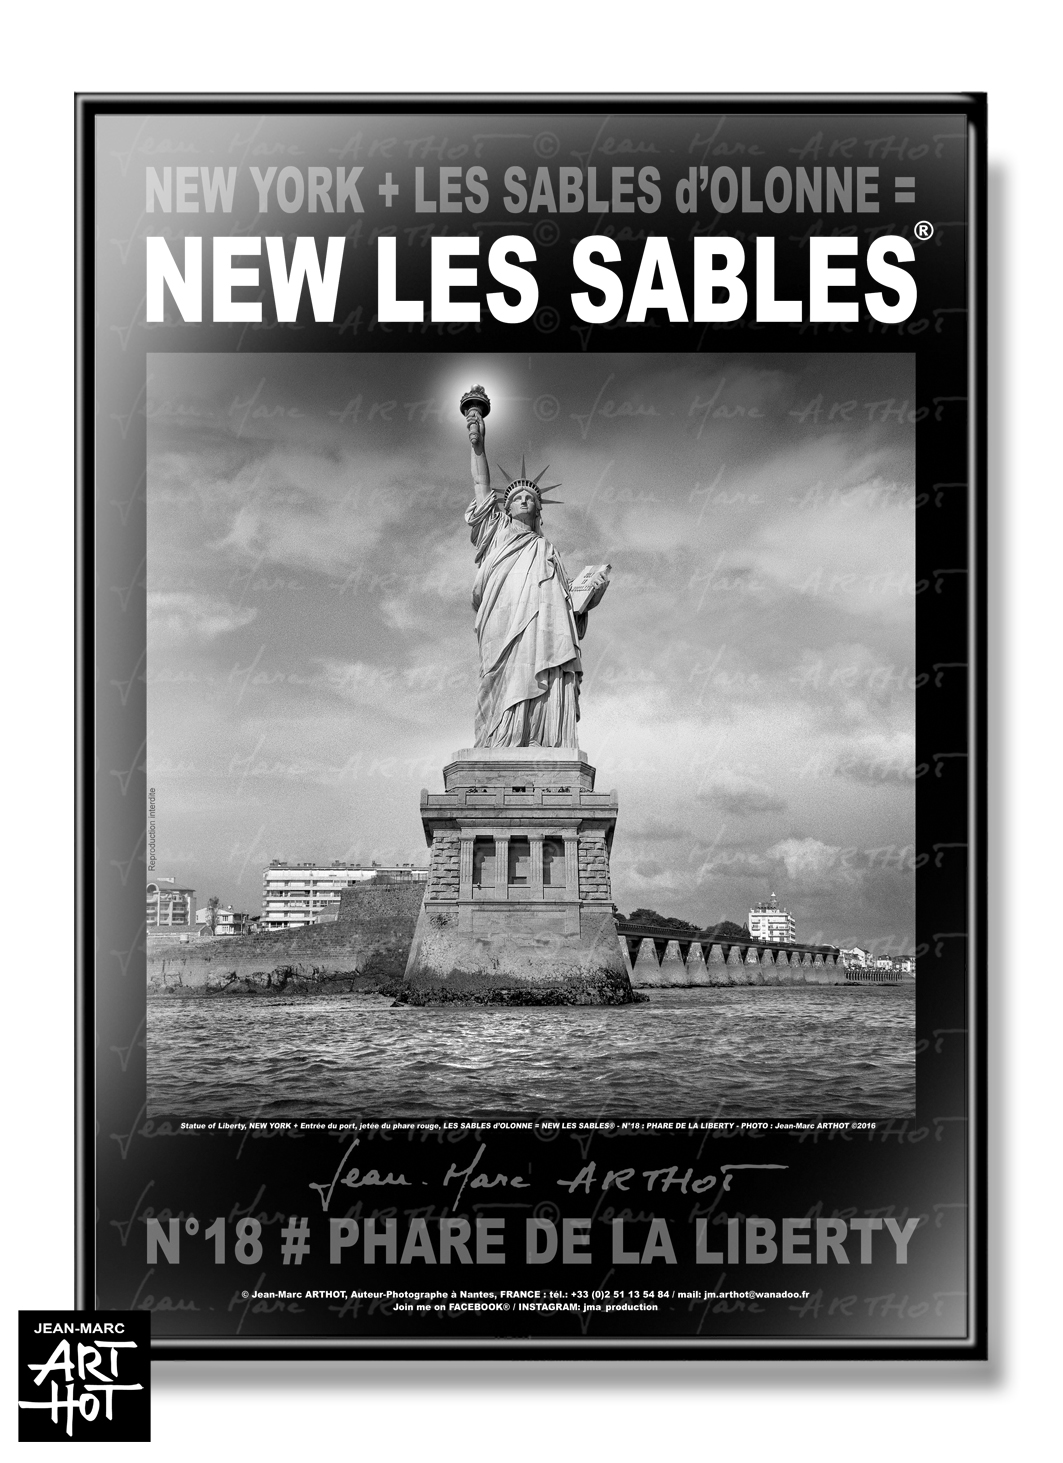 arthot-photo-art-b&amp;w-new-york-vendee-sables-olonne-newlessables-018-phare-liberty-AFFICHE